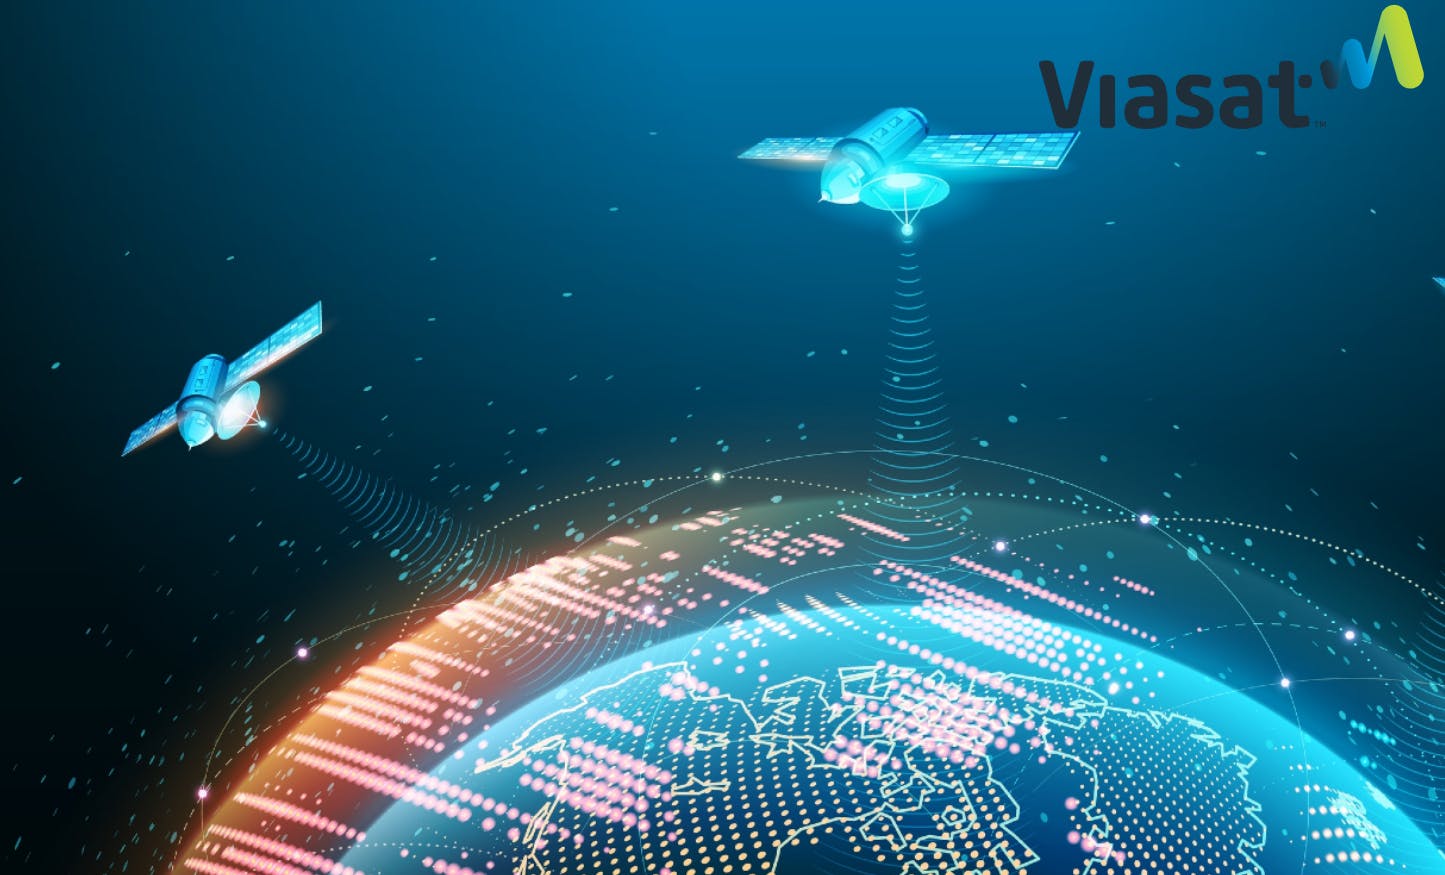 Viasat Internet: Satellite Internet Services Review